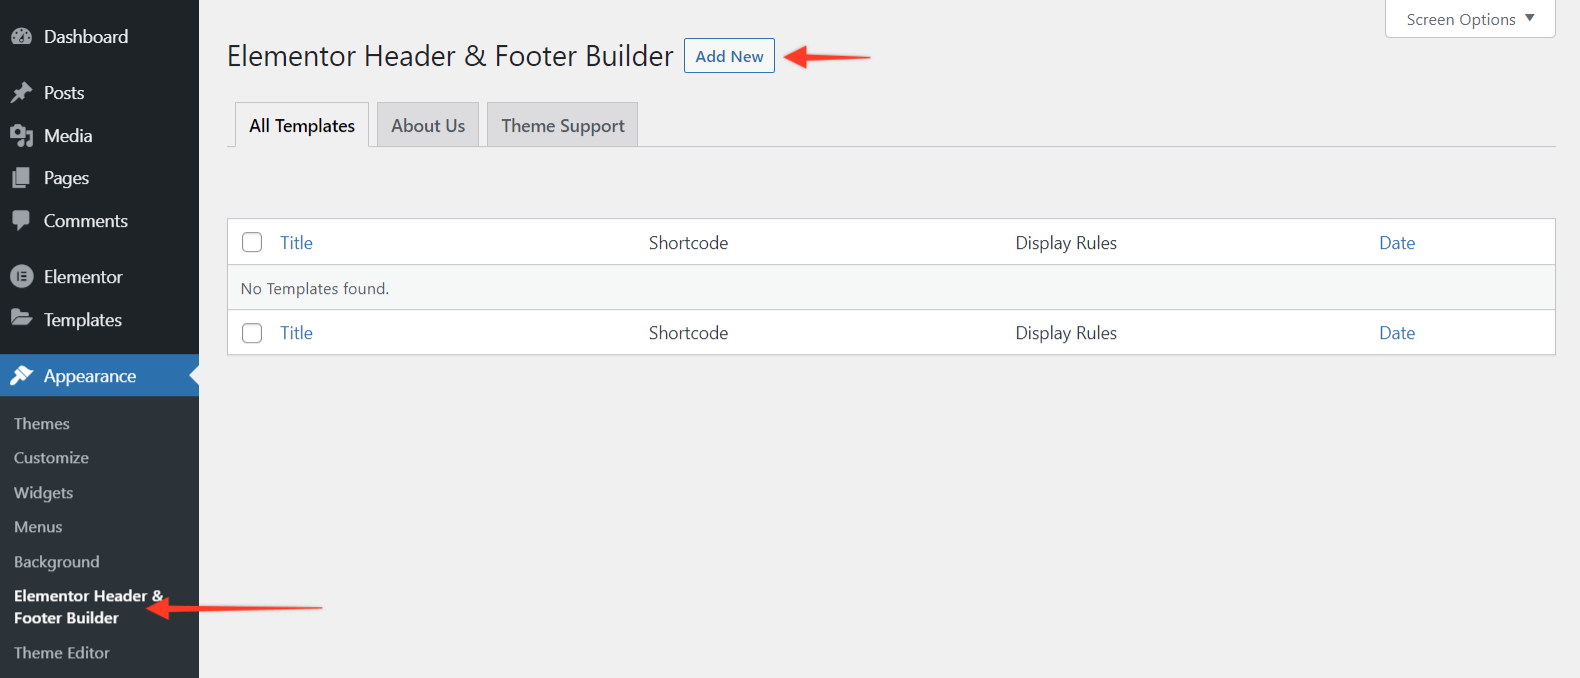 Elementor Header & Footer Builder add new